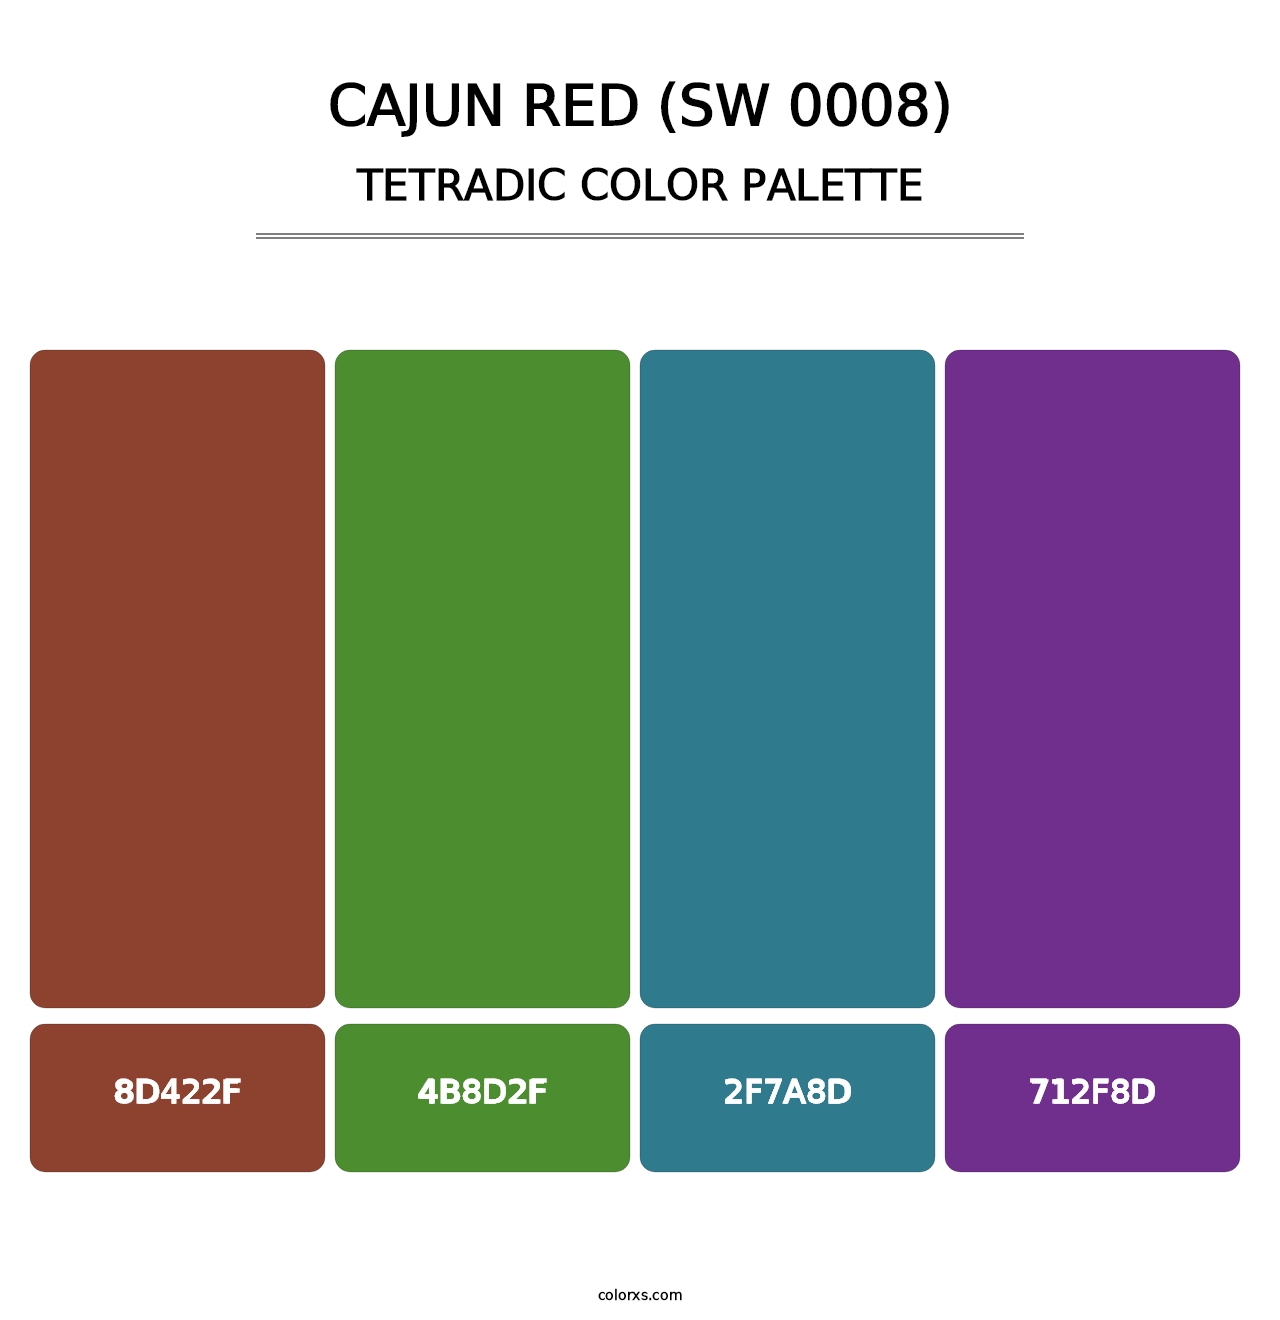 Cajun Red (SW 0008) - Tetradic Color Palette